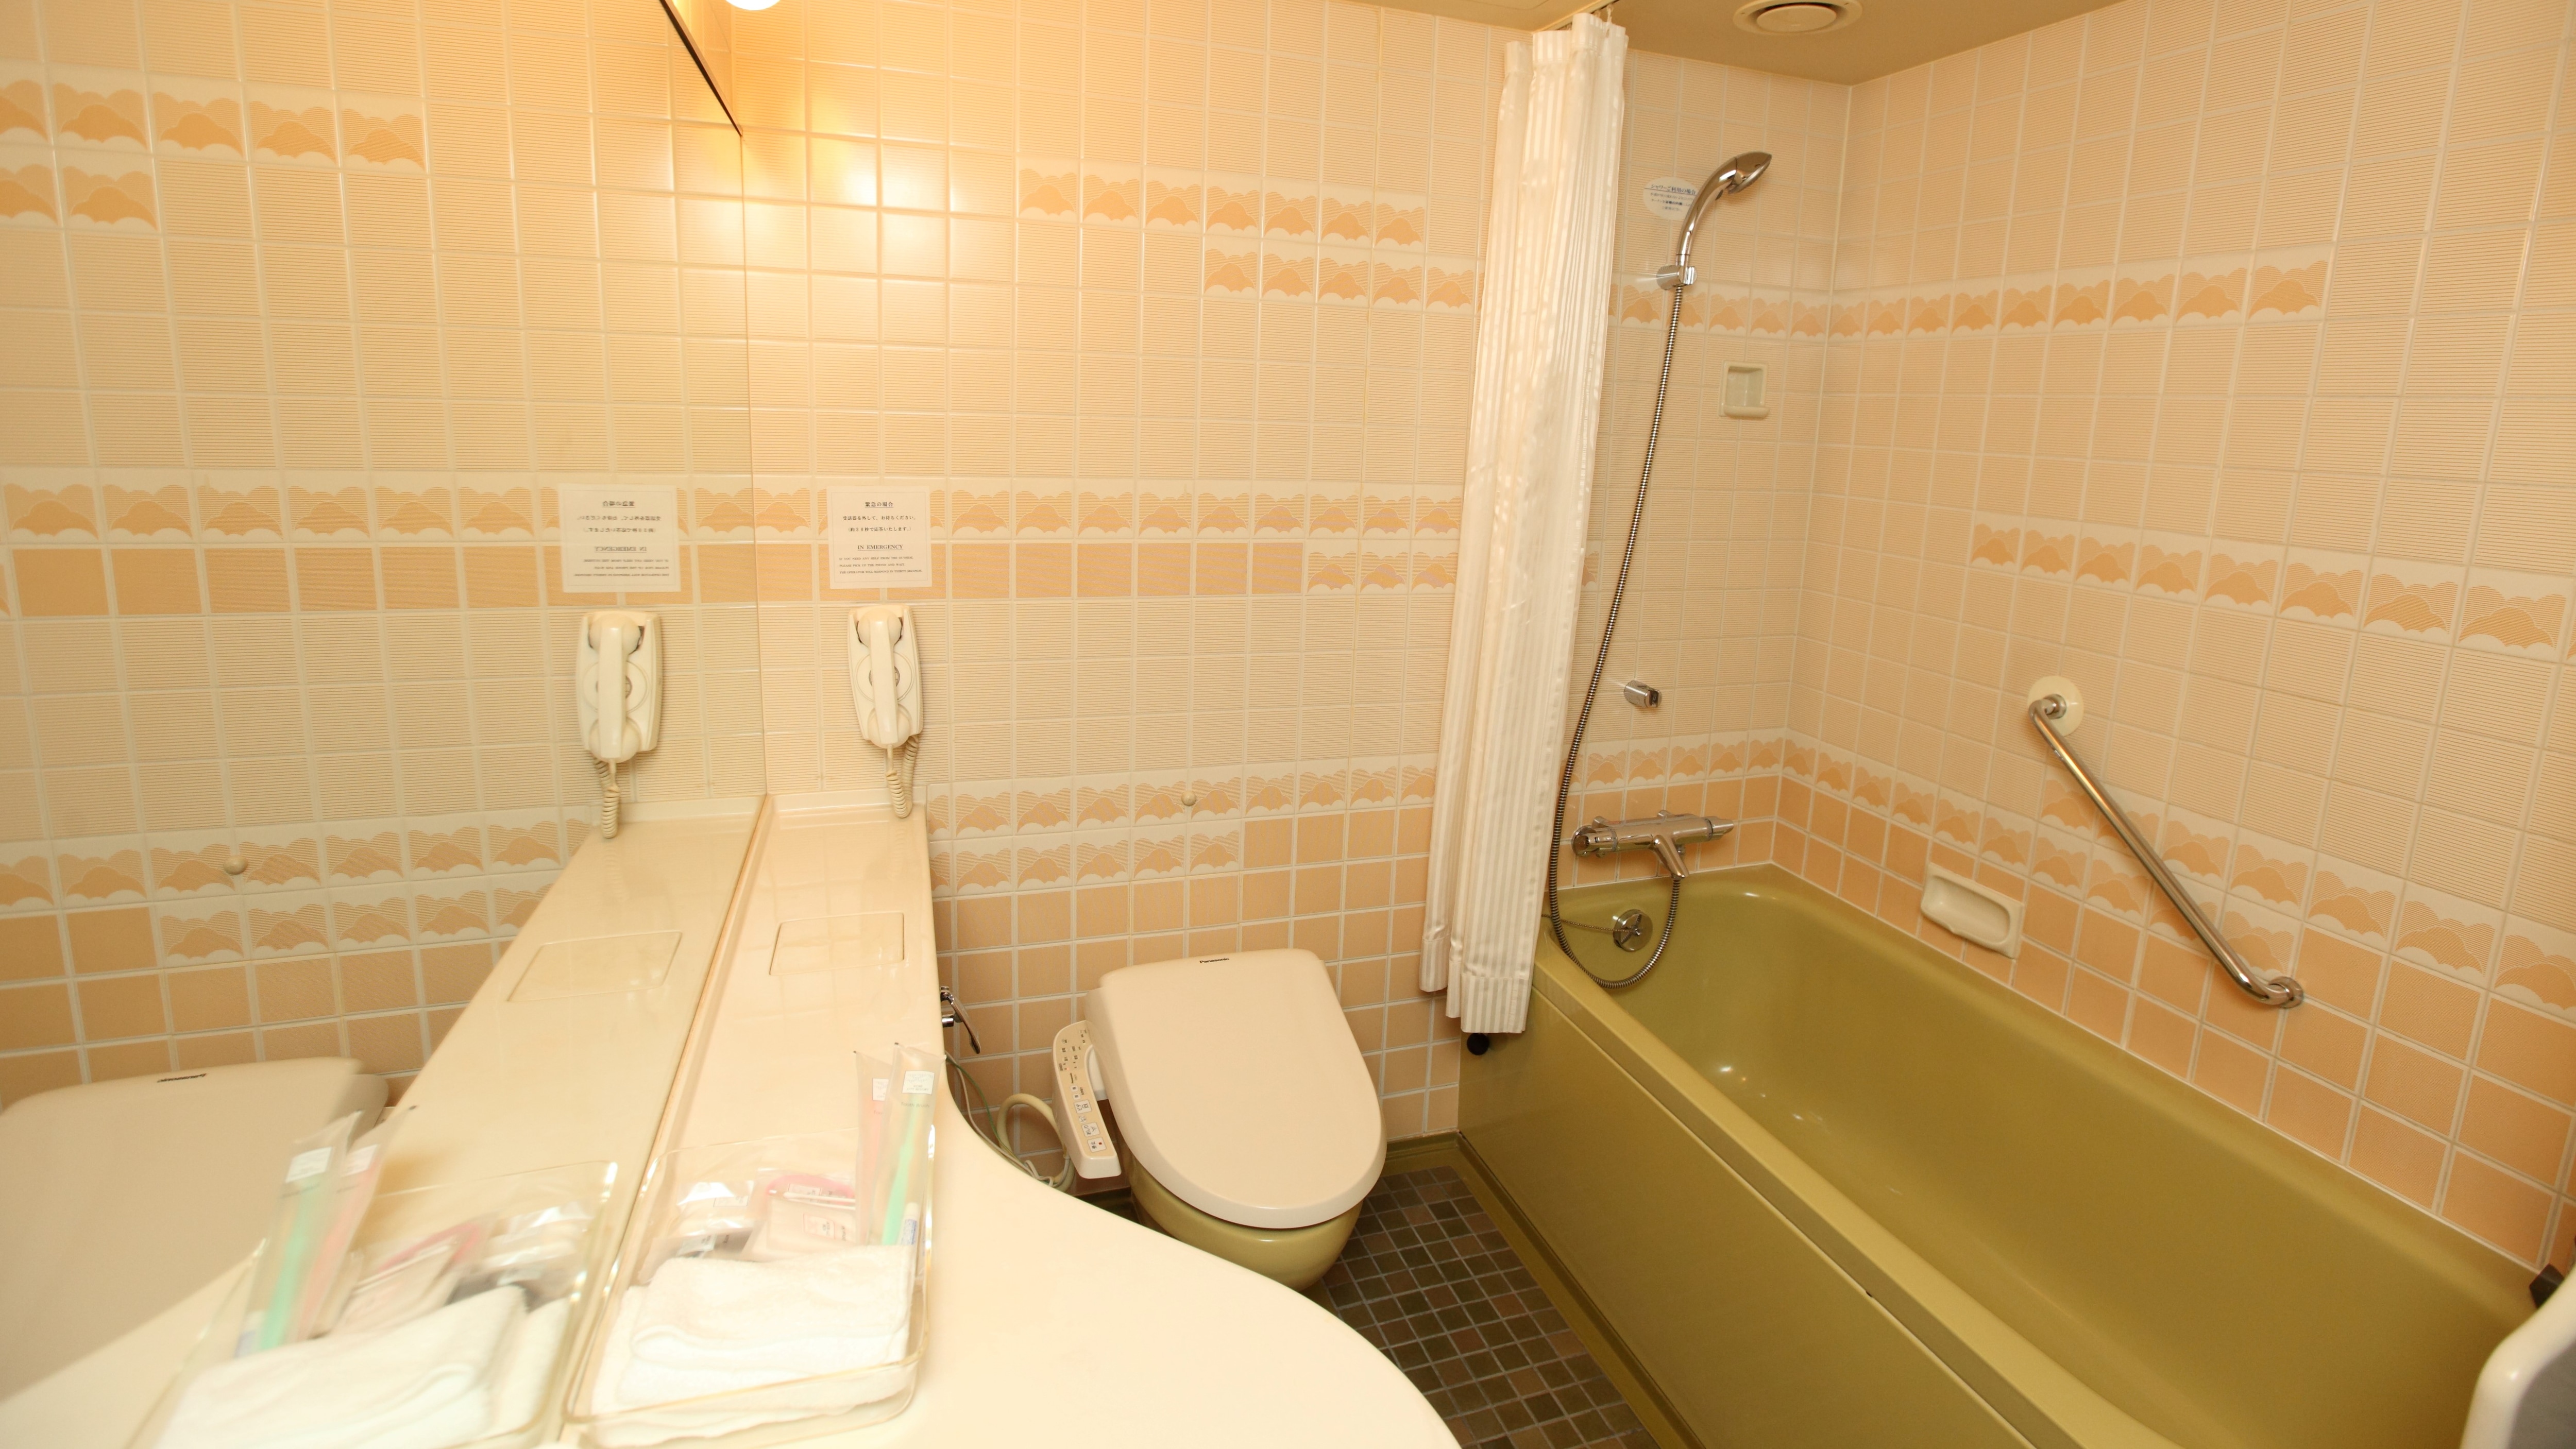 An example of a standard floor bathroom